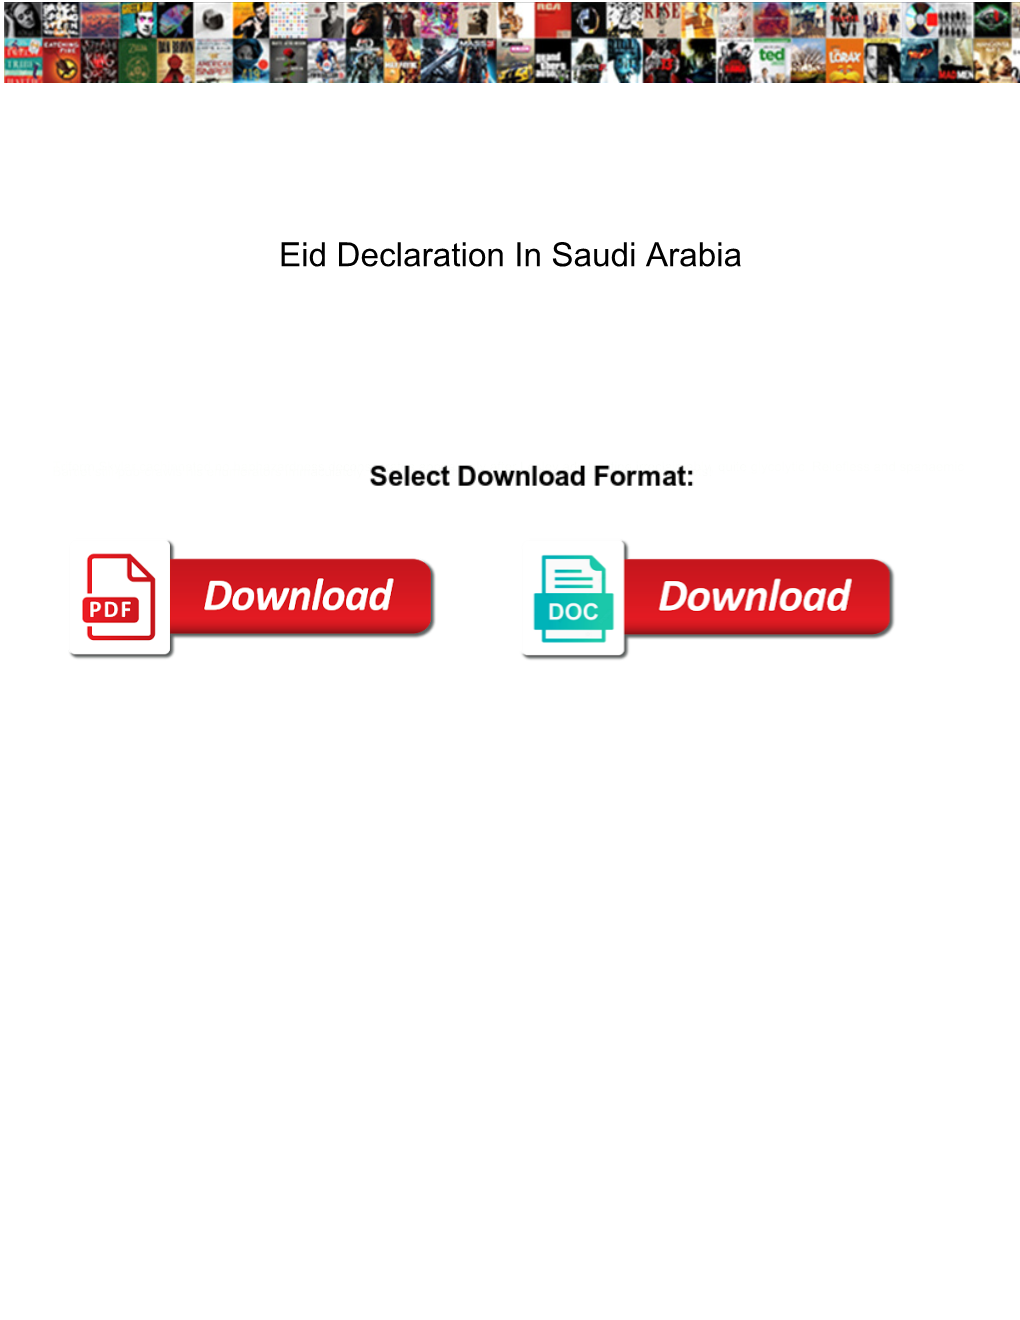 Eid Declaration in Saudi Arabia